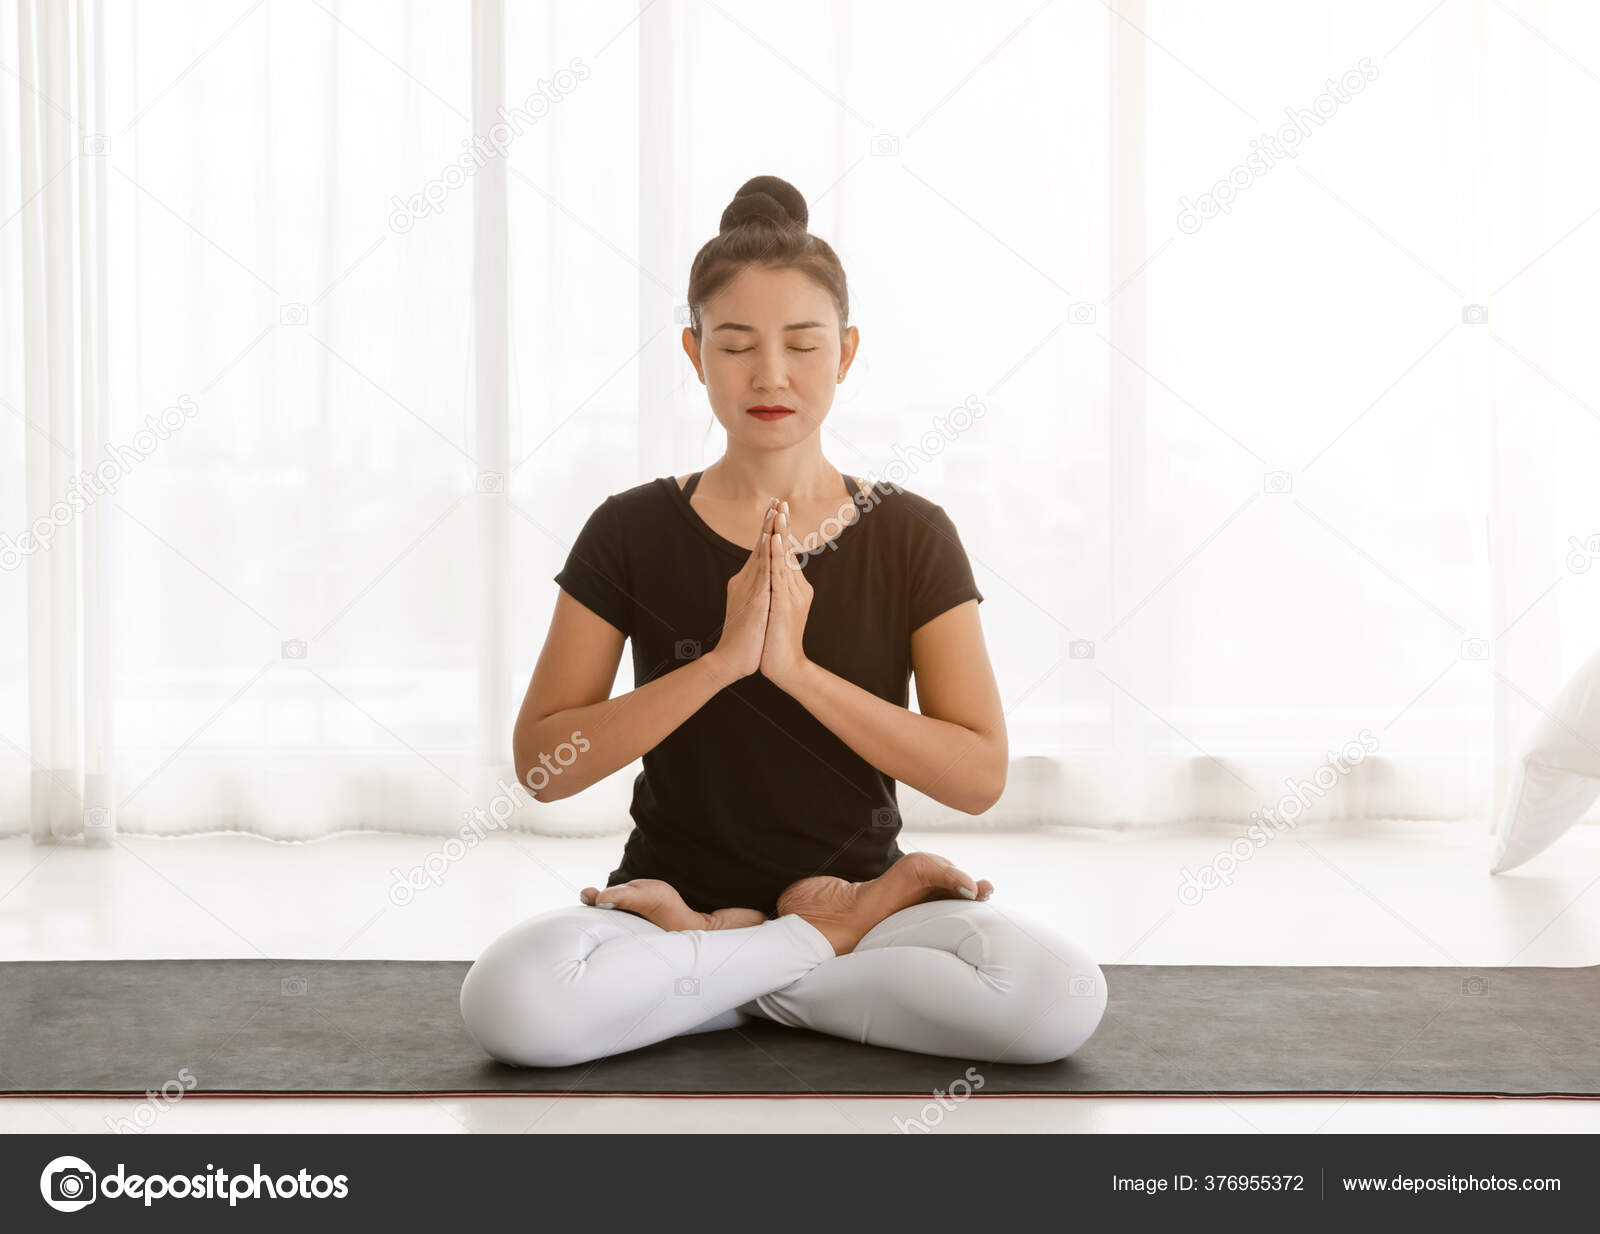 Lotus Pose: How to Practice Padmasana - Yoga Journal